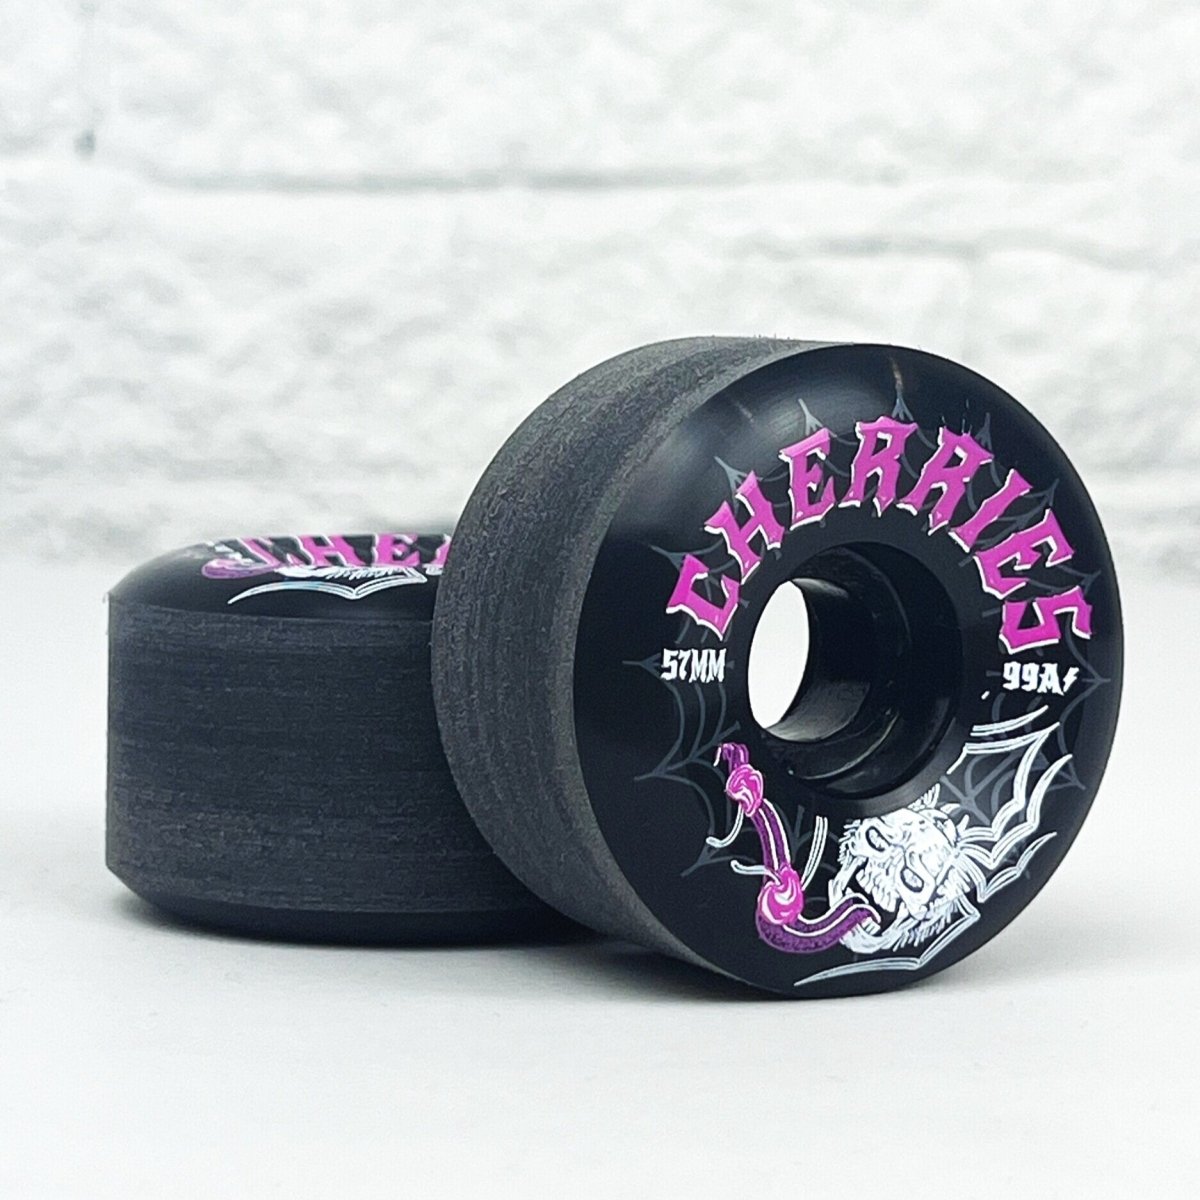 Cherries 57mm 99a Spiders Wheels - Skateboard - Wheels